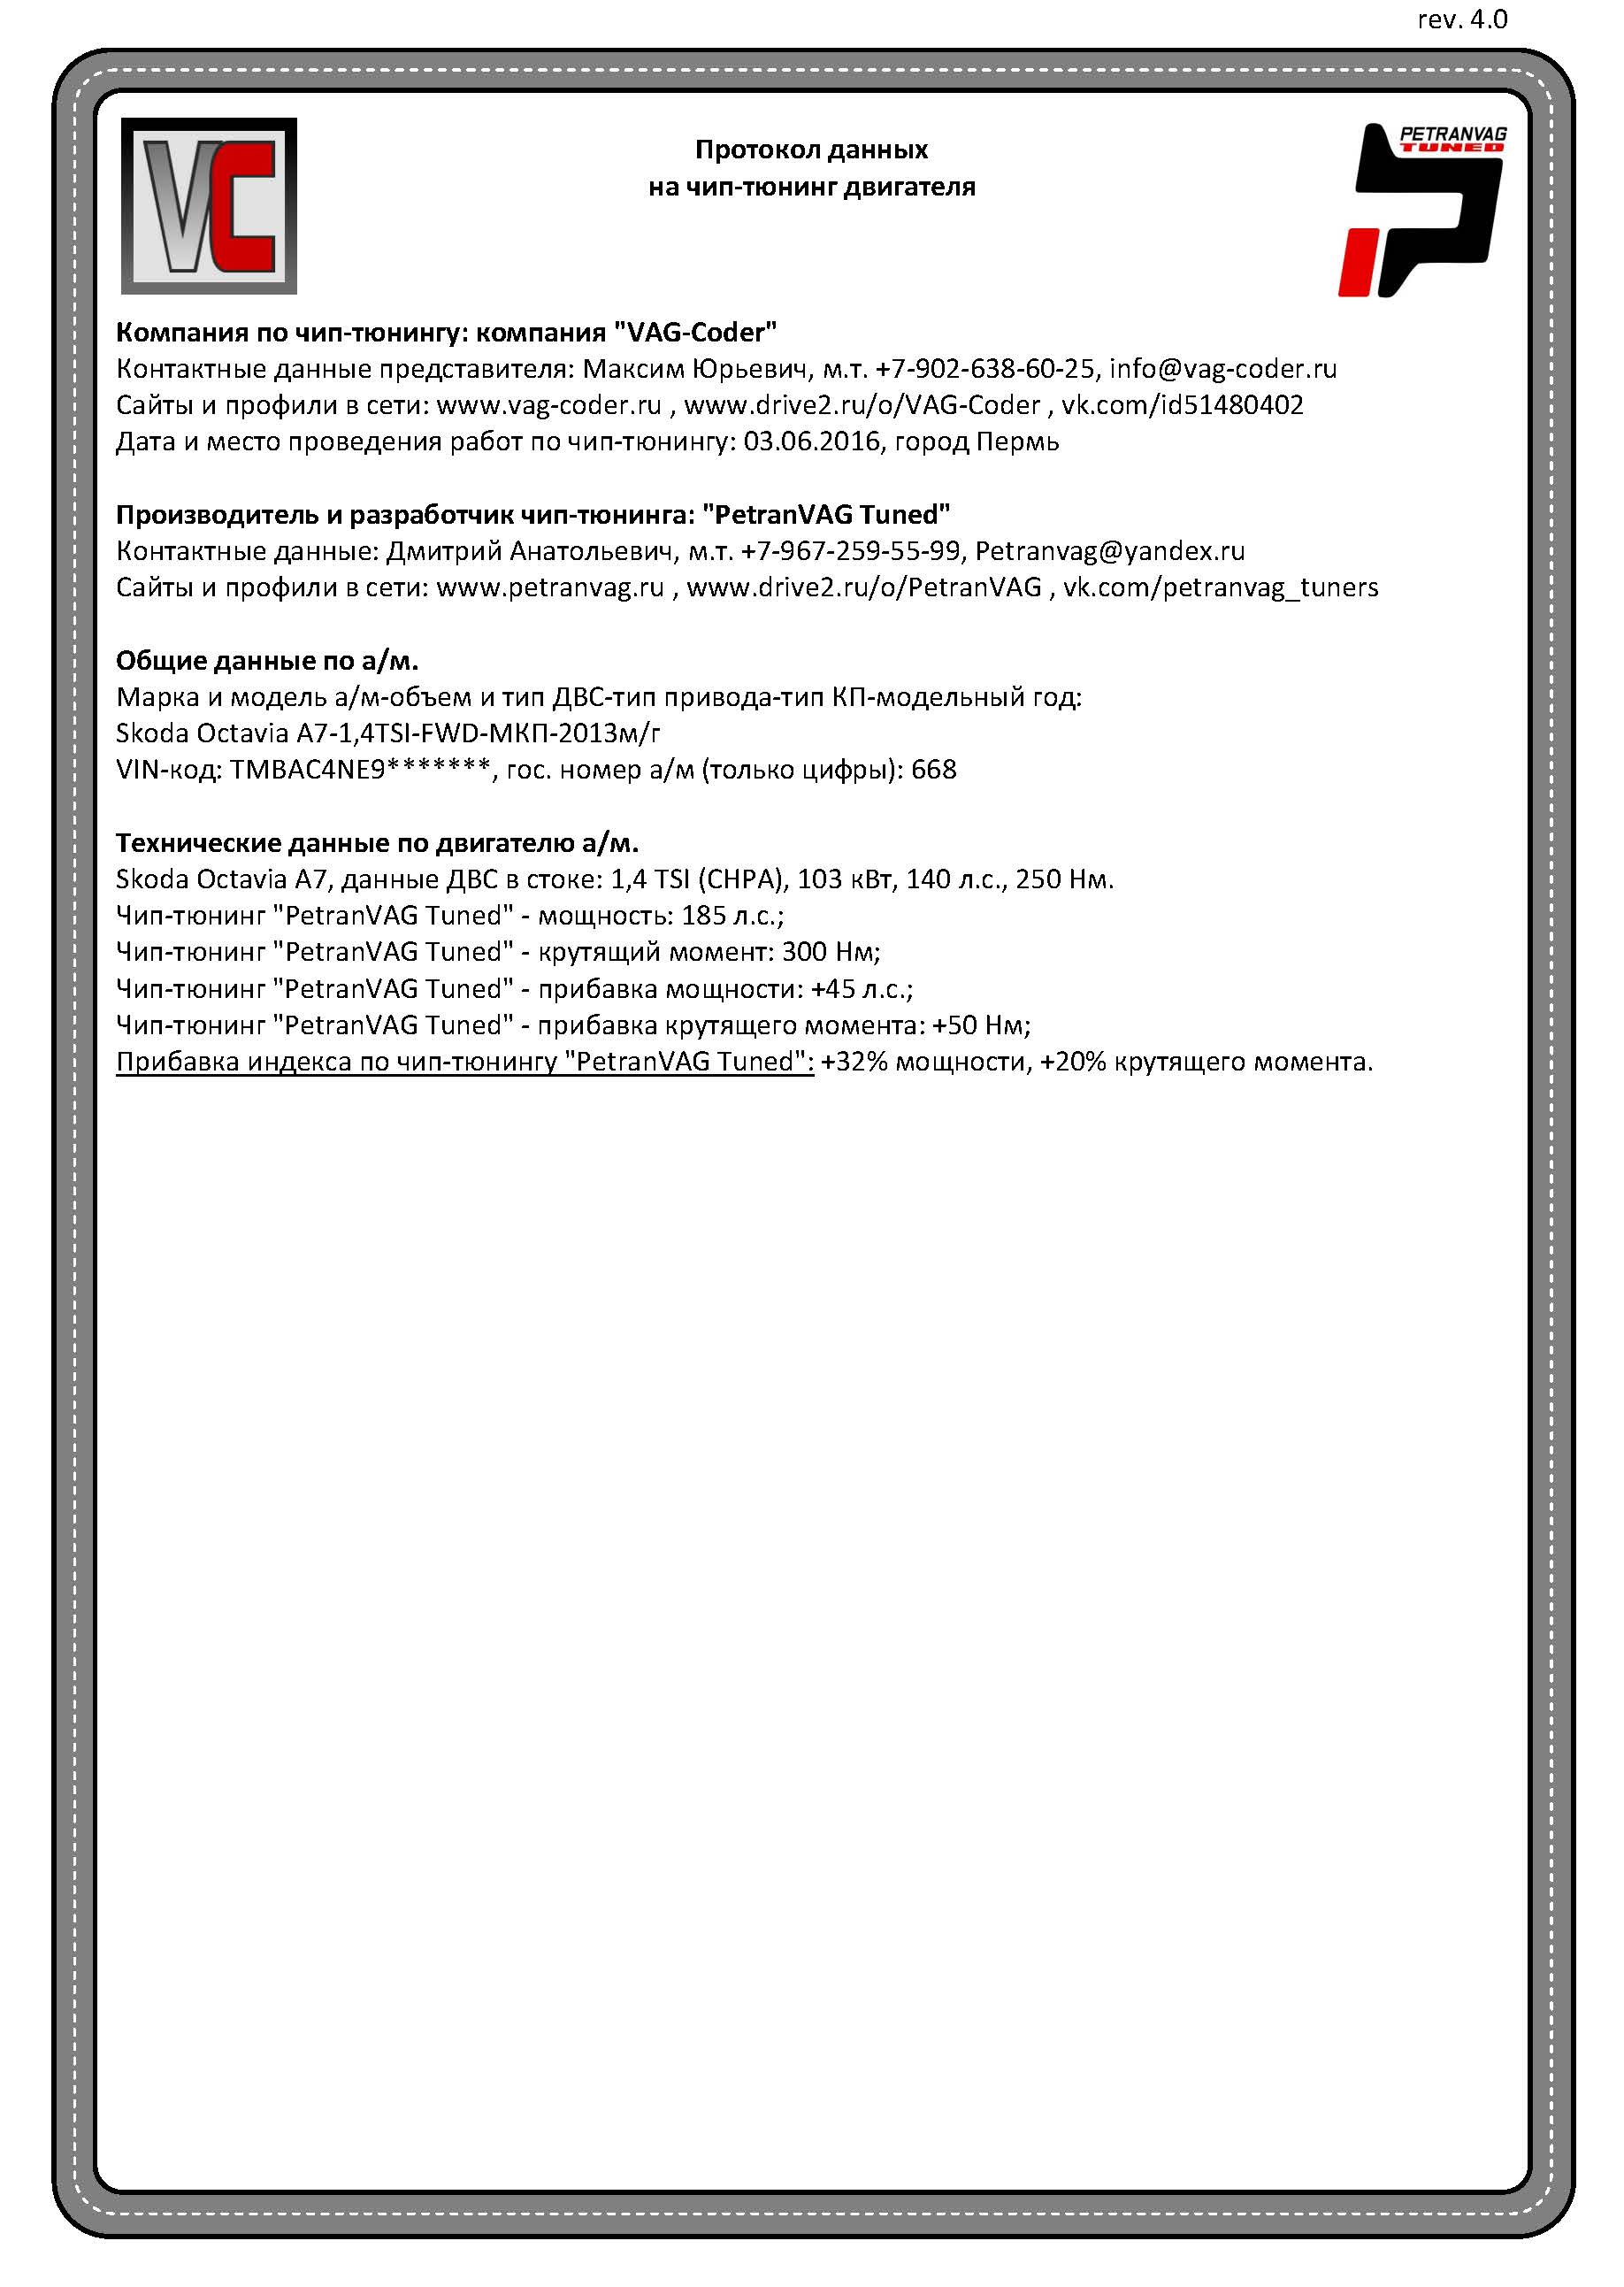 Skoda Octavia A7(668)-1,4TSI-FWD-МКП-2013мг - Протокол на чип-тюн PetranVAG-Tuned от VAG-Coder.ru